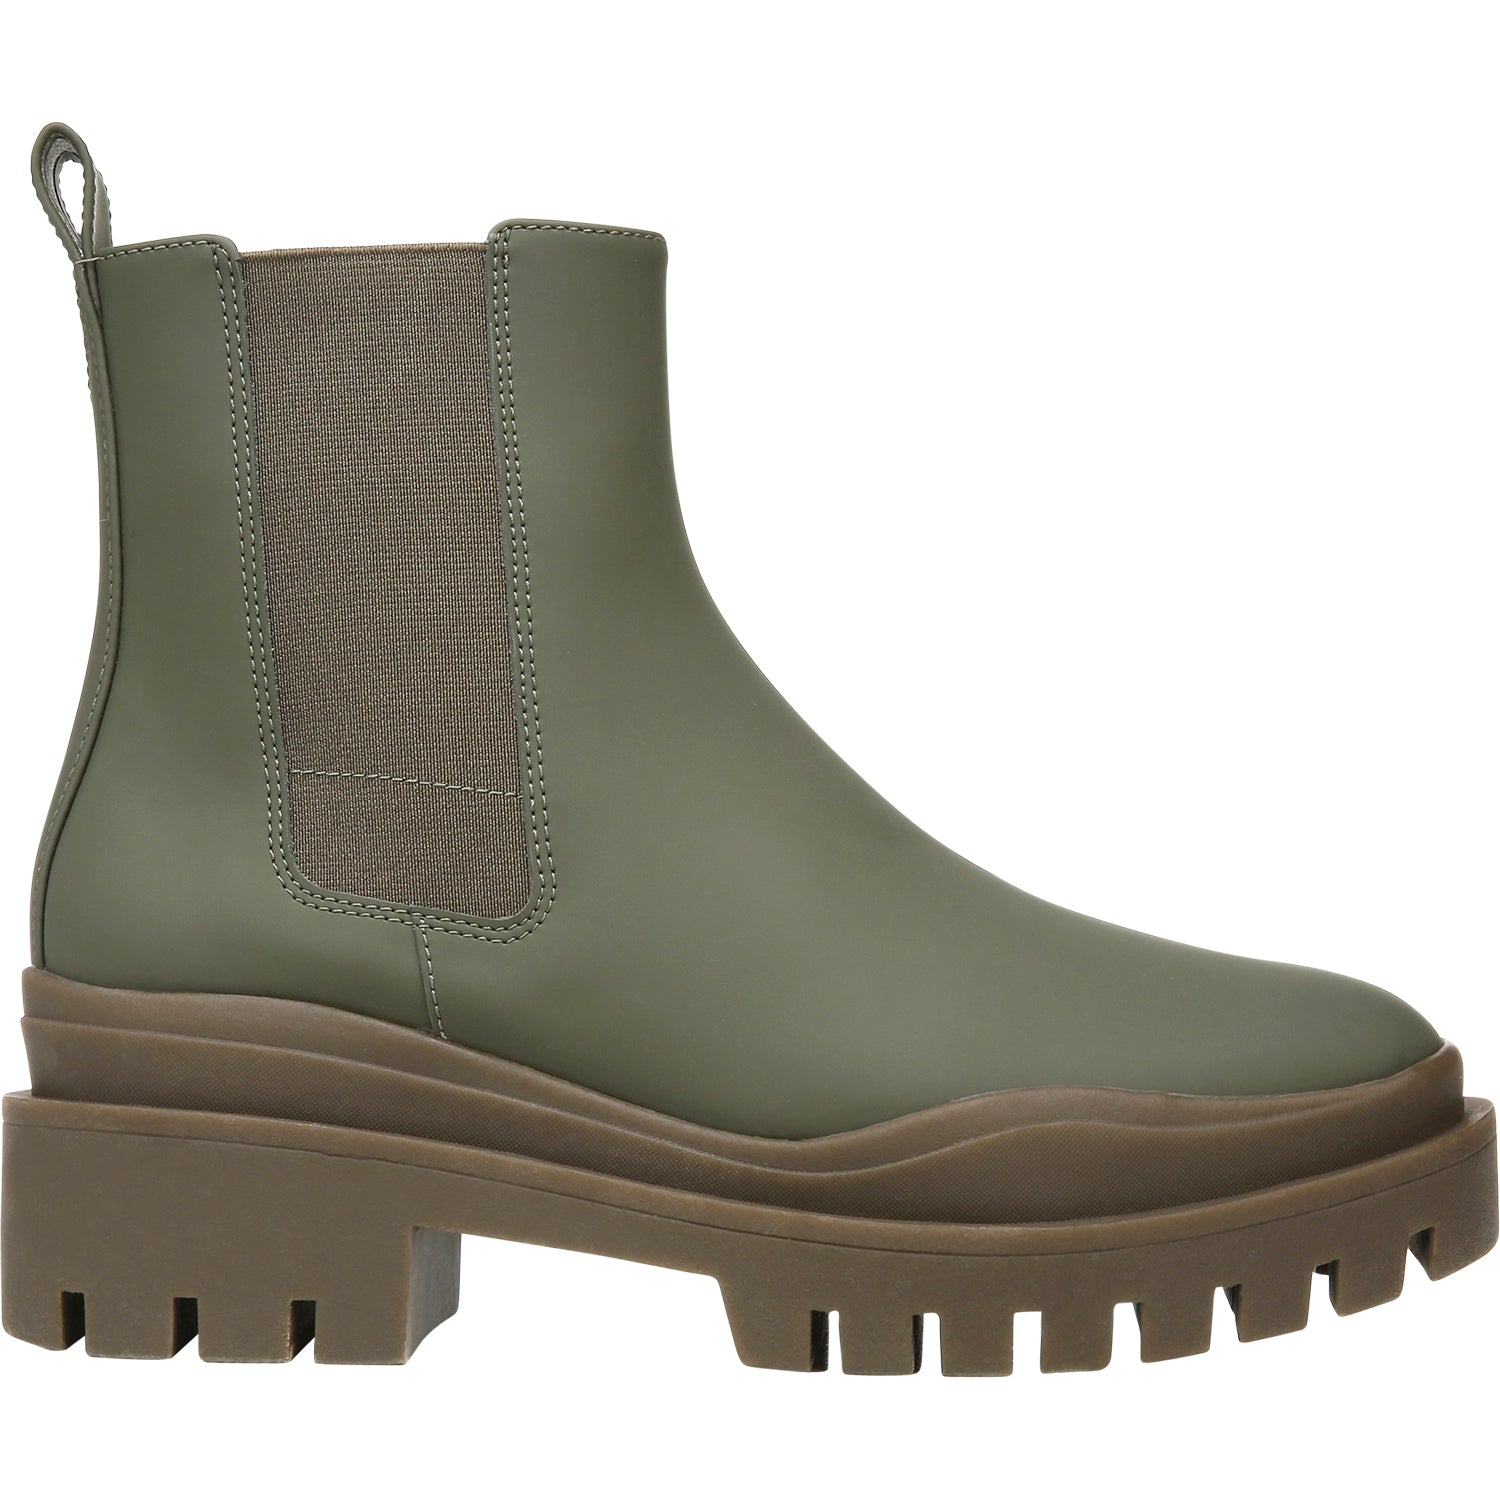 Vionic Karsen Olive | Women's Waterproof Boots | Footwear etc.